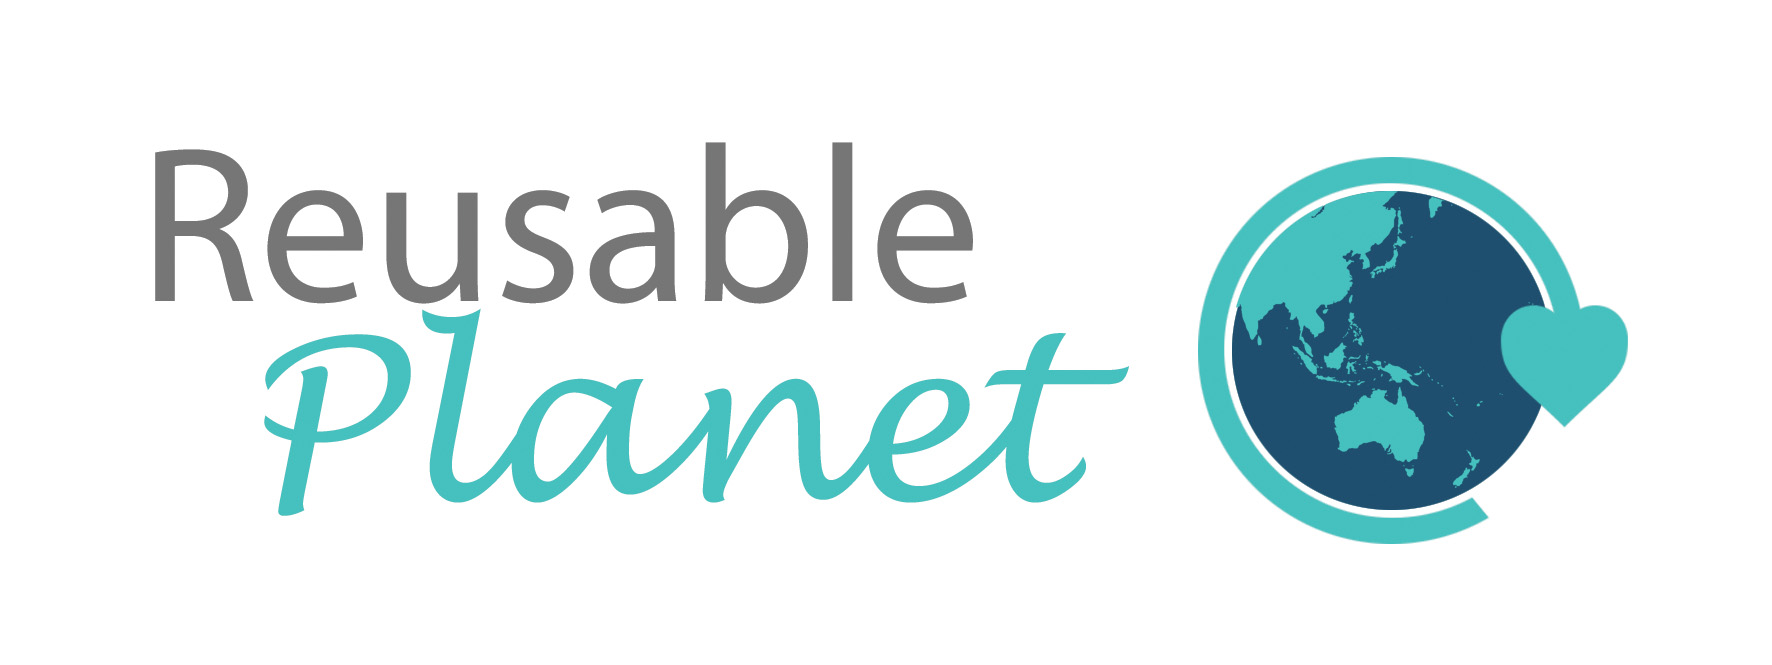 Reusable Planet